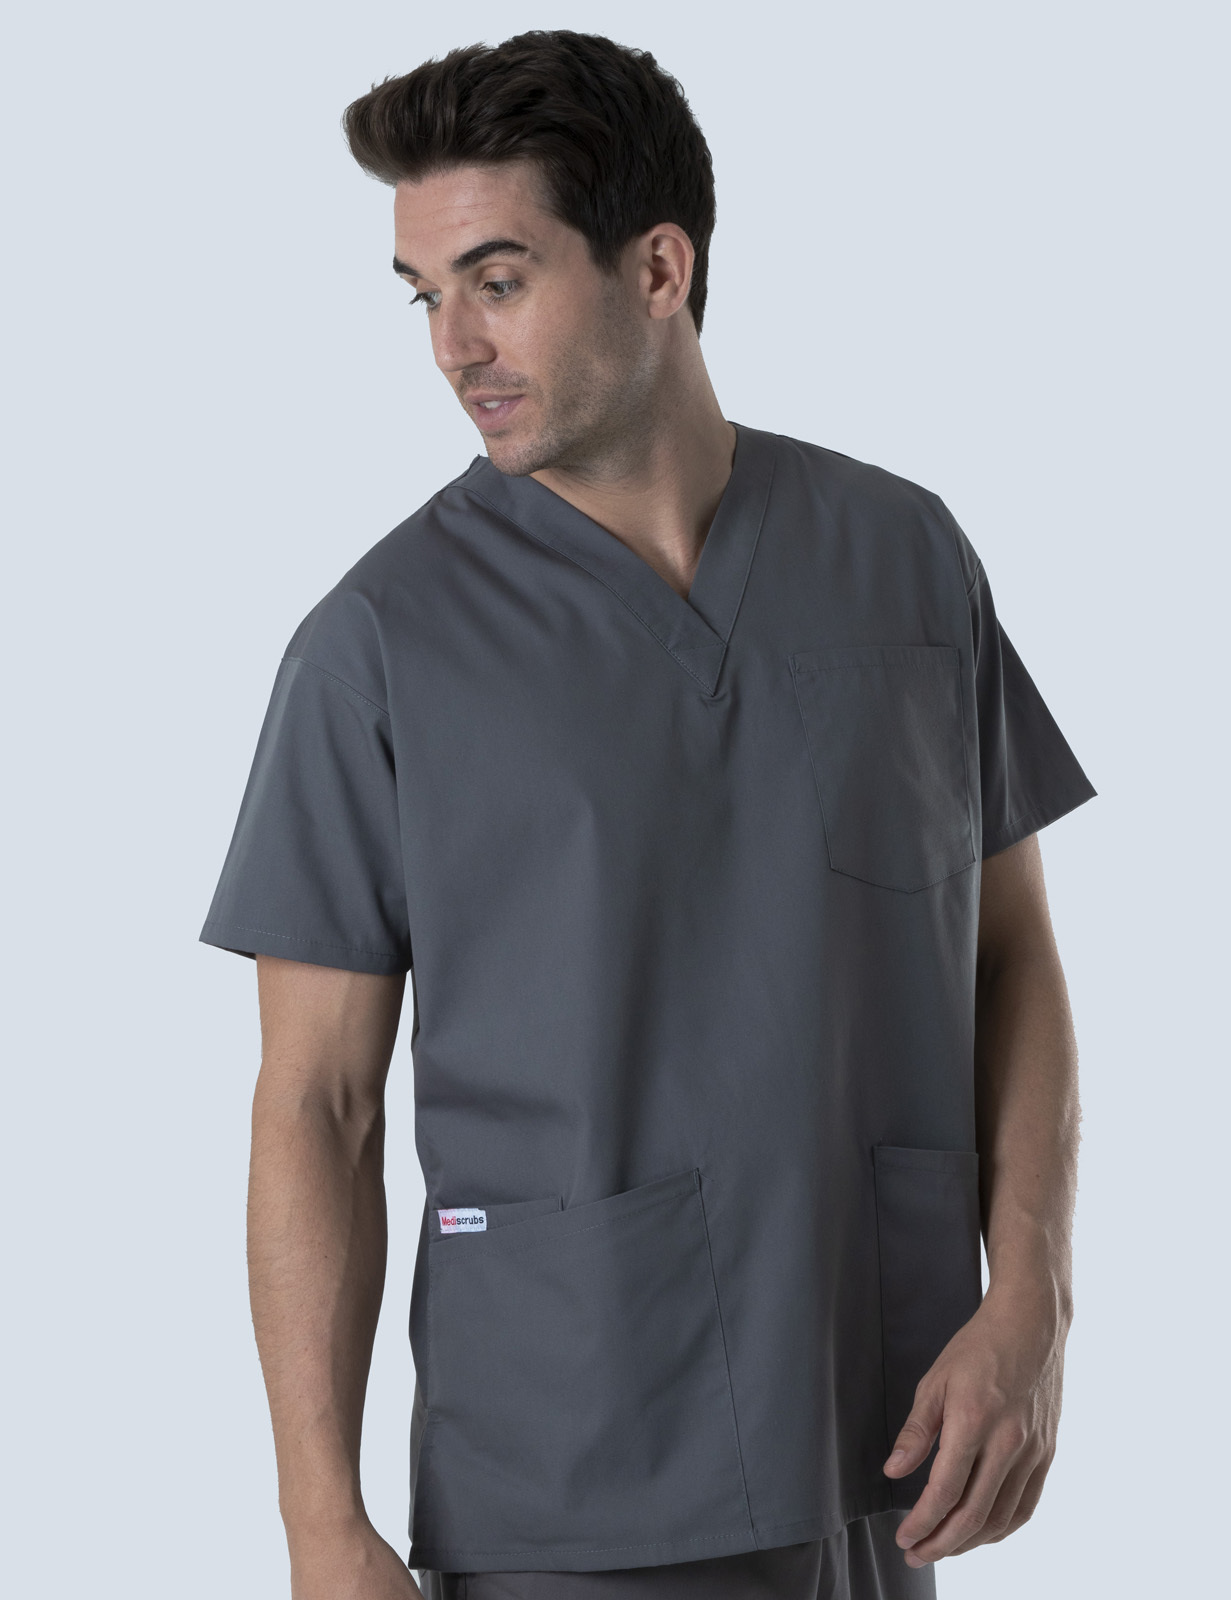 Queensland Children's Hospital Emergency Department Clinical Nurse  Uniform Top Bundle  (4 Pocket Top in Steel Grey  incl Logos)